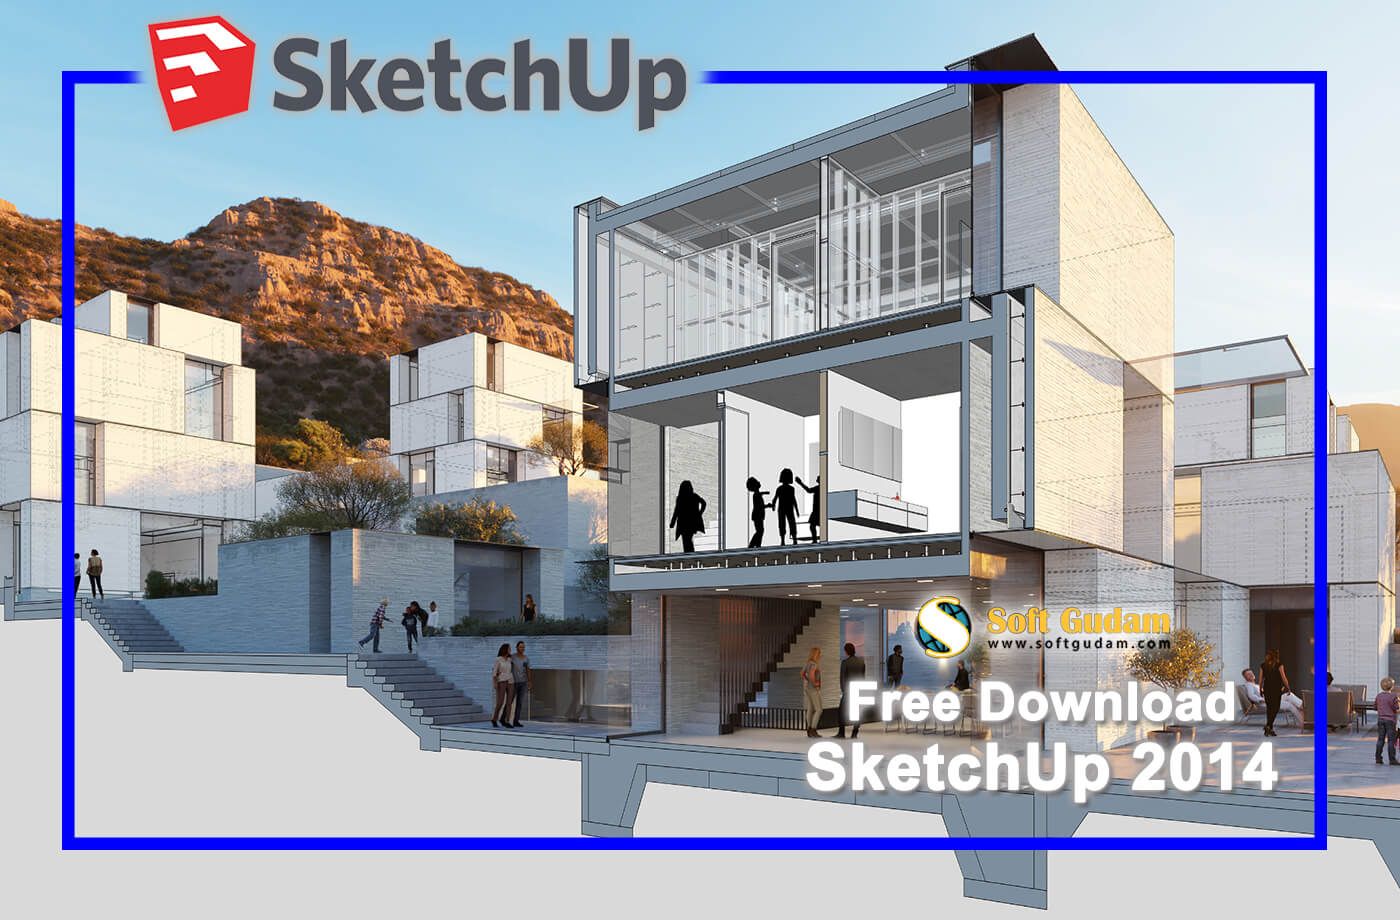 sketchup pro 2014 license free